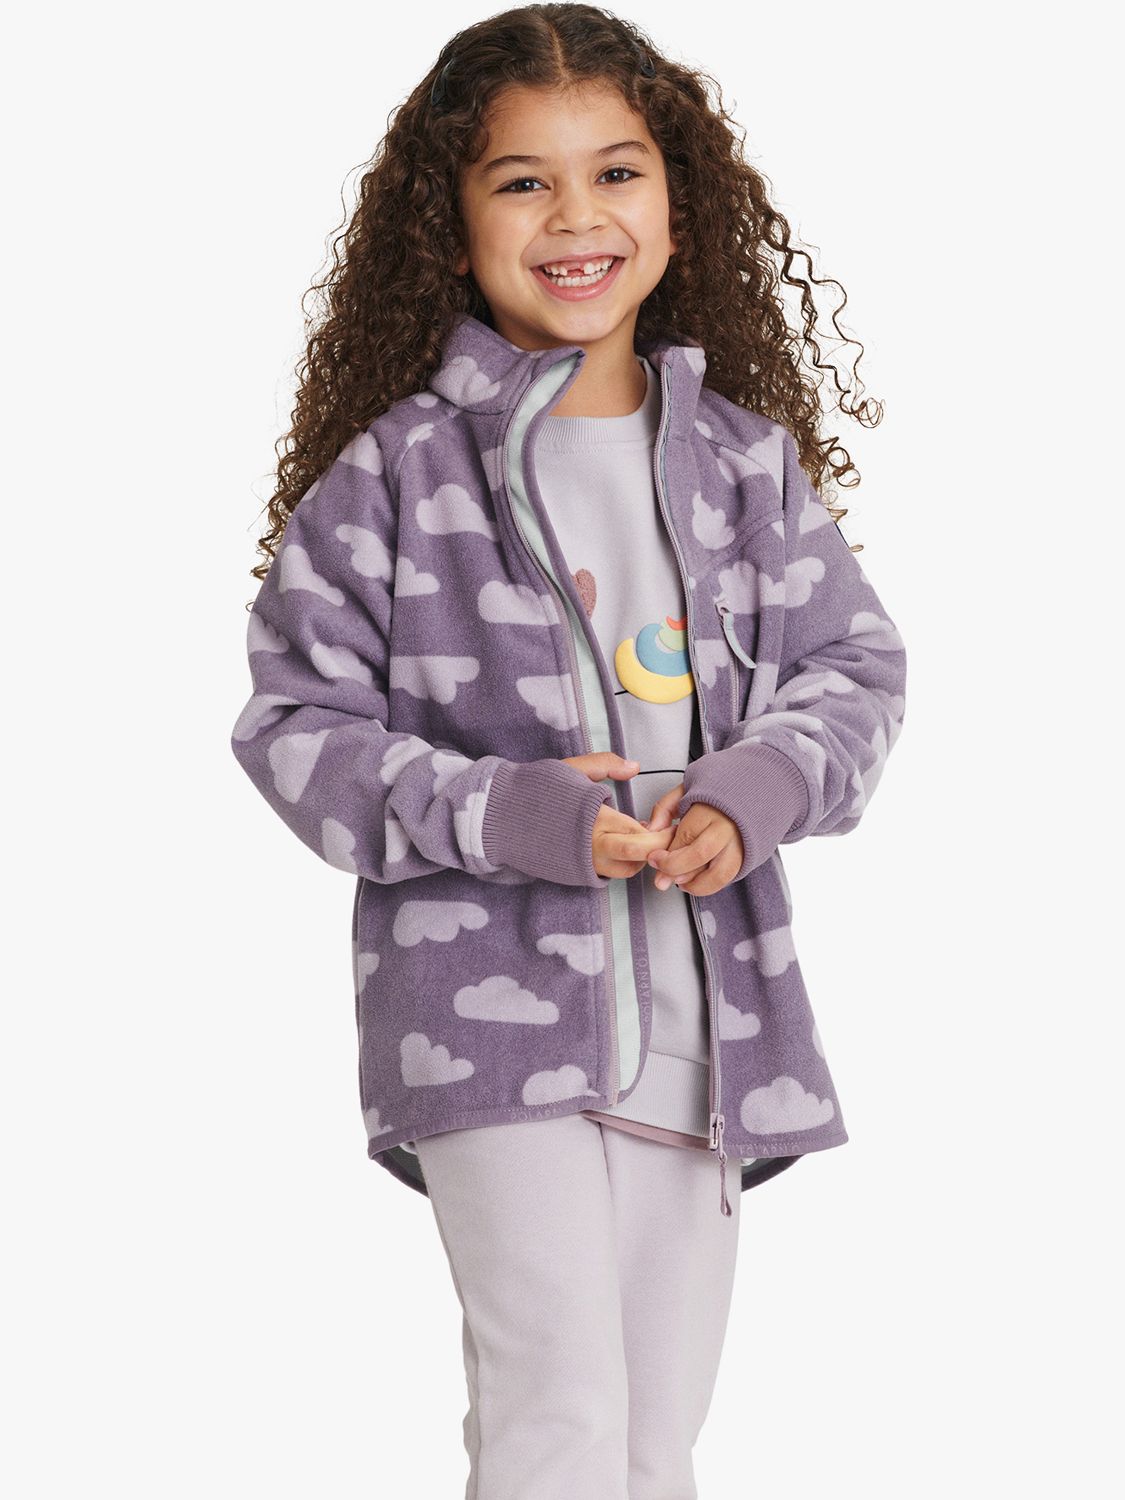 Polarn O. Pyret Kids' Zip Up Fleece Jacket, Purple